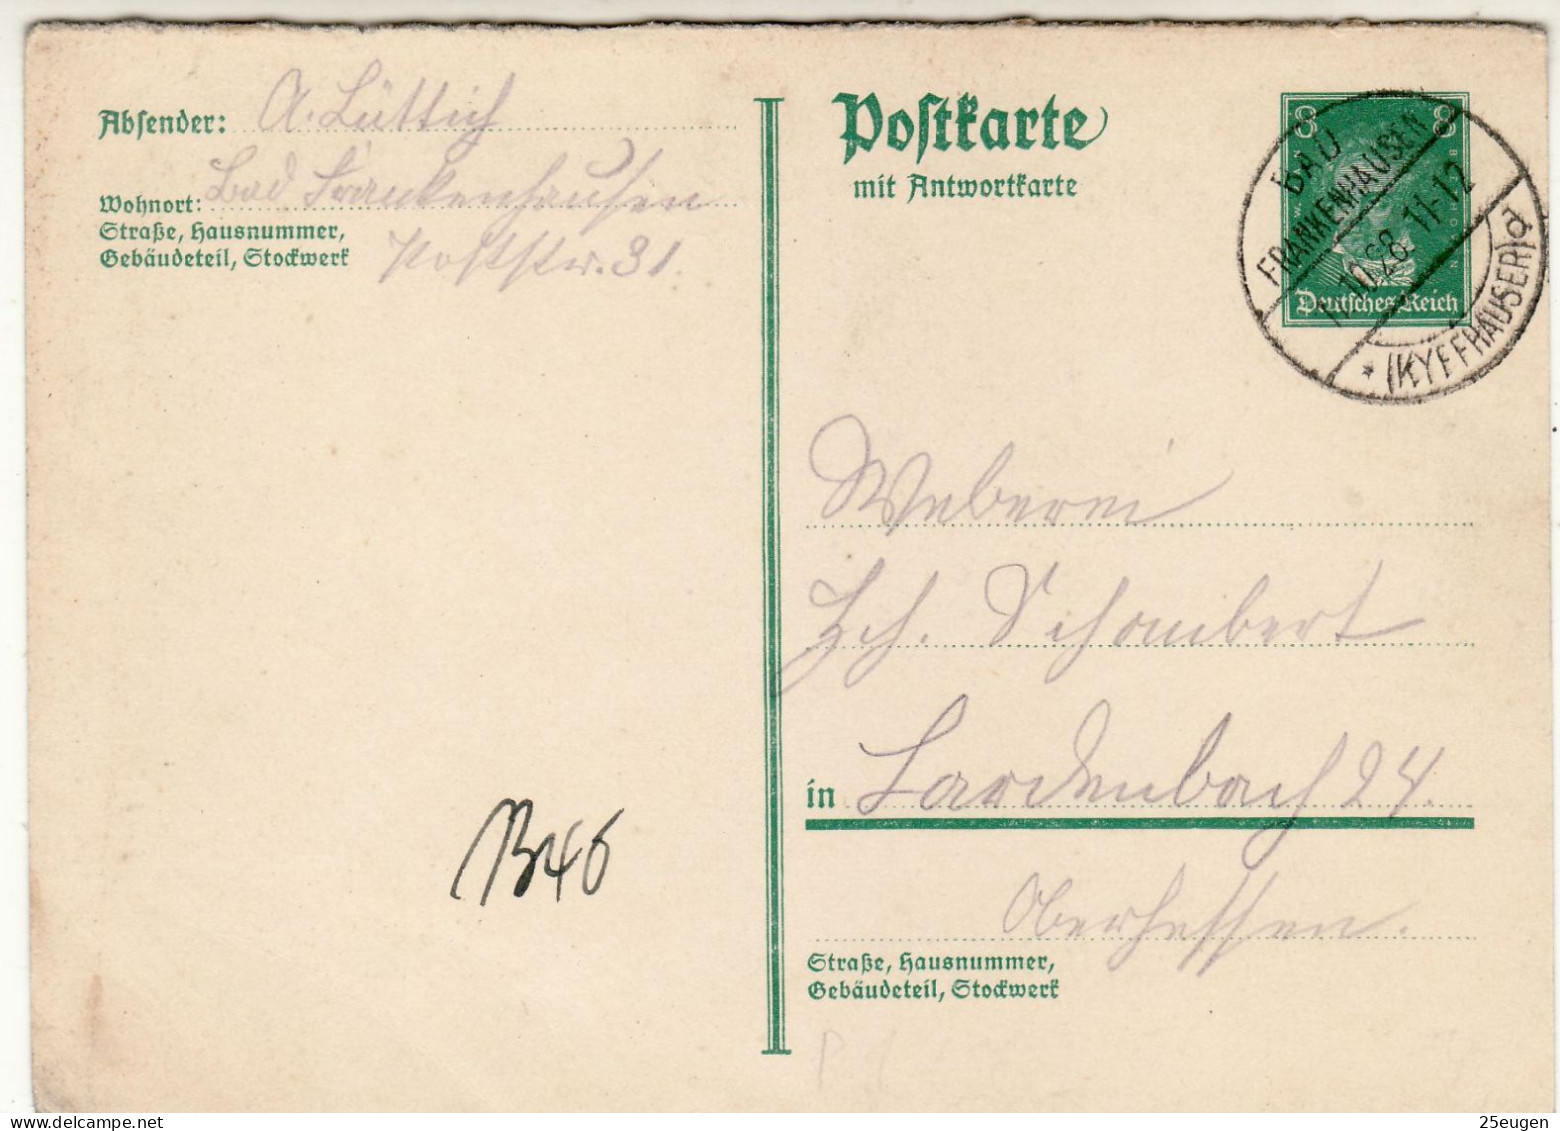 GERMANY WEIMAR REPUBLIC 1928 POSTCARD  MiNr P 177 I F SENT FROM BAD FRANKENHAUSEN - Cartes Postales